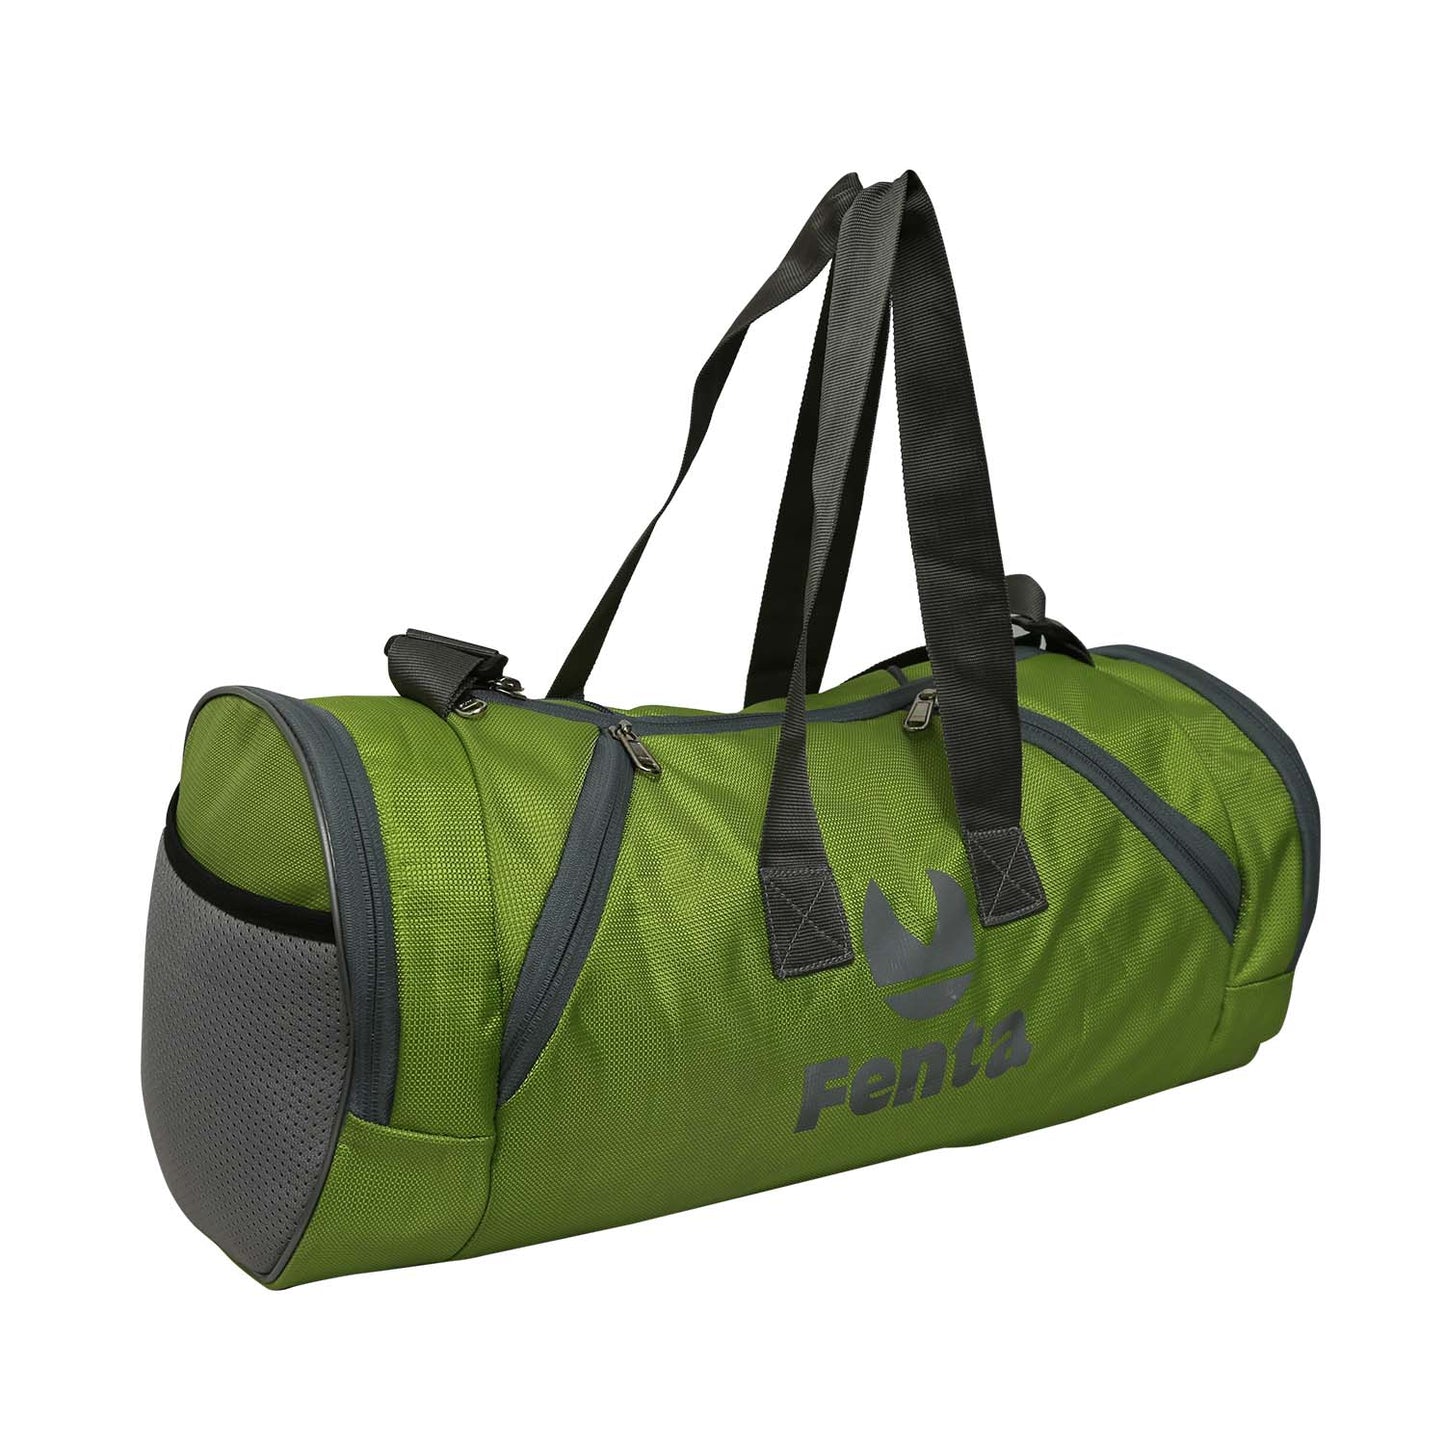 TD-1 Travel Duffle and Gym Bag